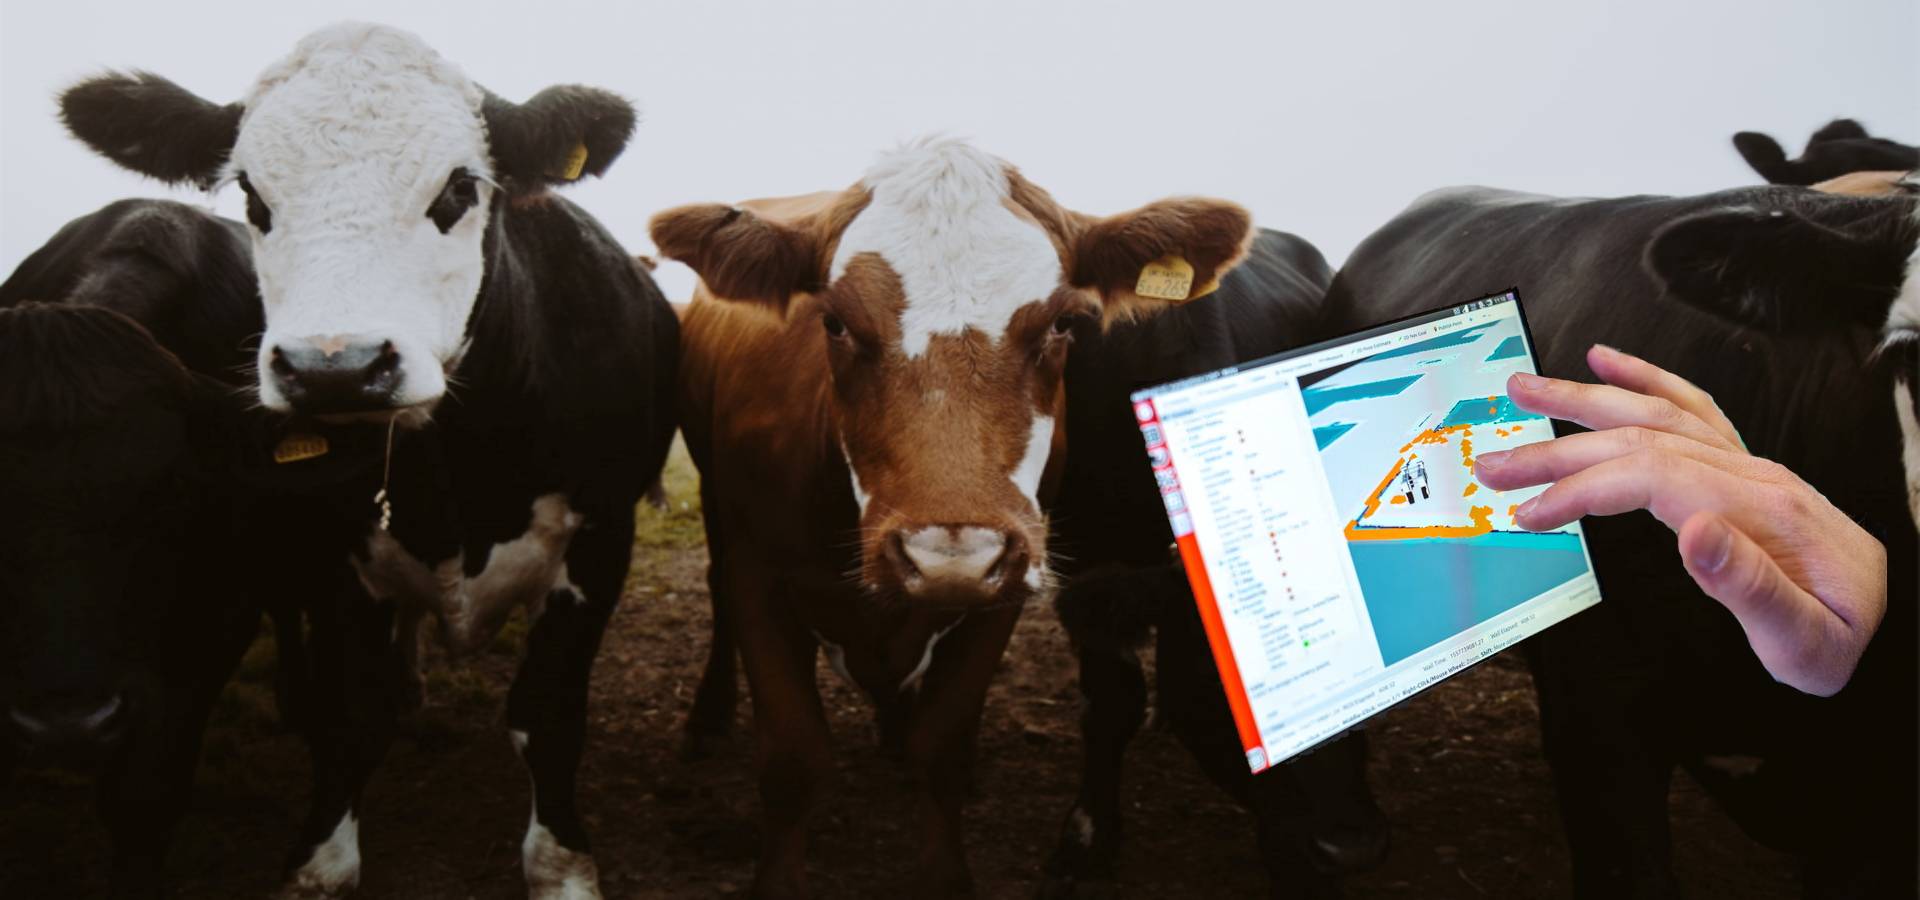 Digitalization in Transforming the Livestock